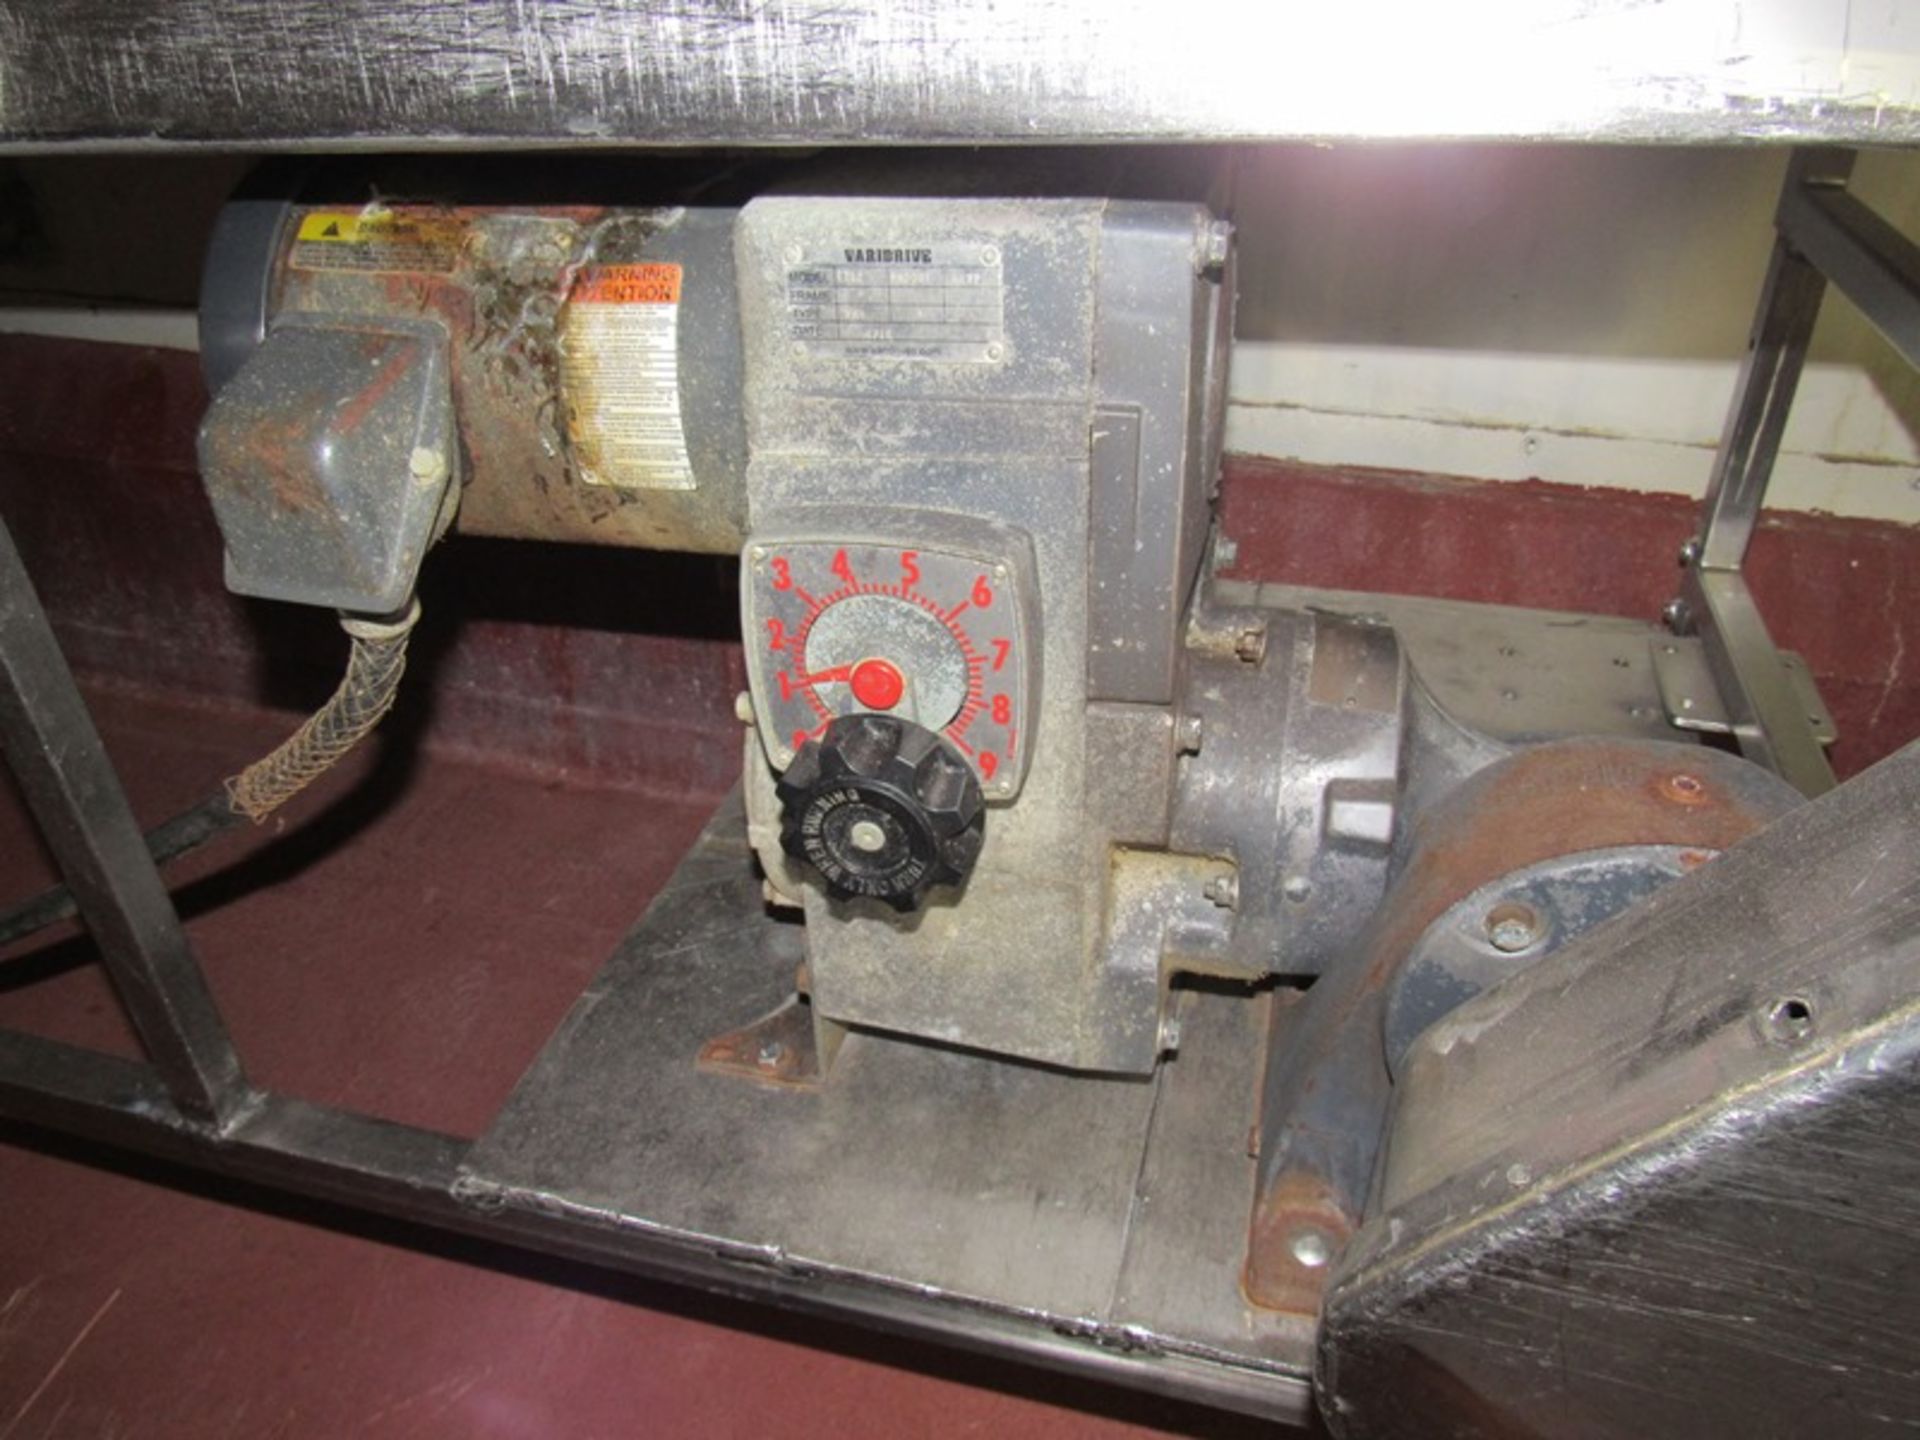 Portable Stainless Steel Conveyor, 28" W X 151" L neoprene belt, Vari Drive on 3 phase motor ( - Image 3 of 3